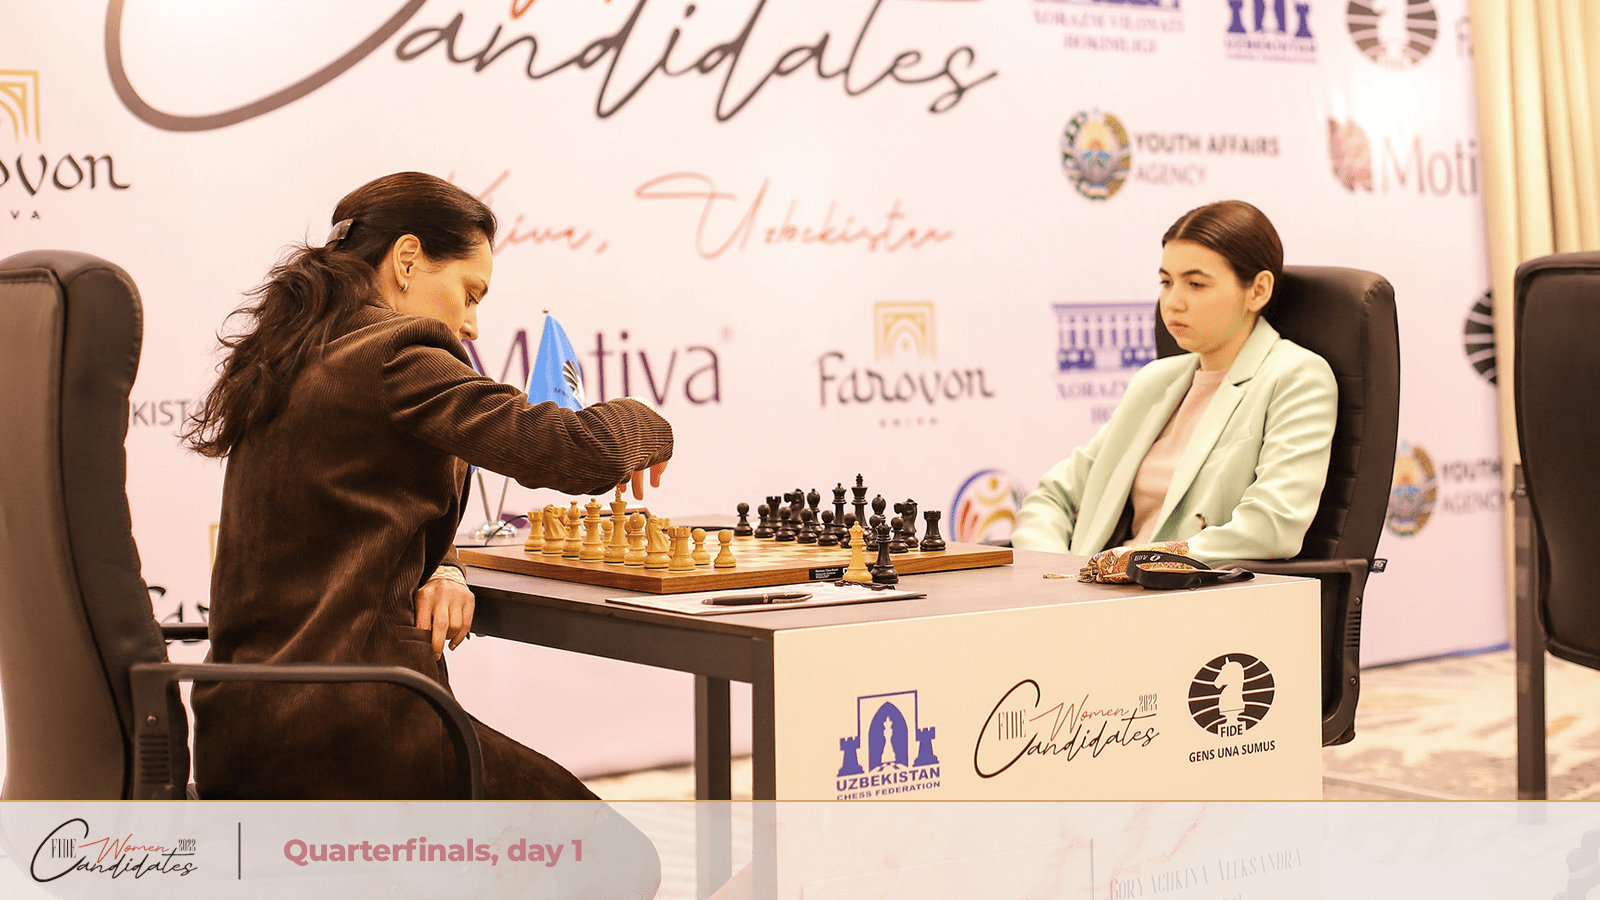 Goryachkina Misses Chance As Women’s Candidates Tournament Resumes In Khiva